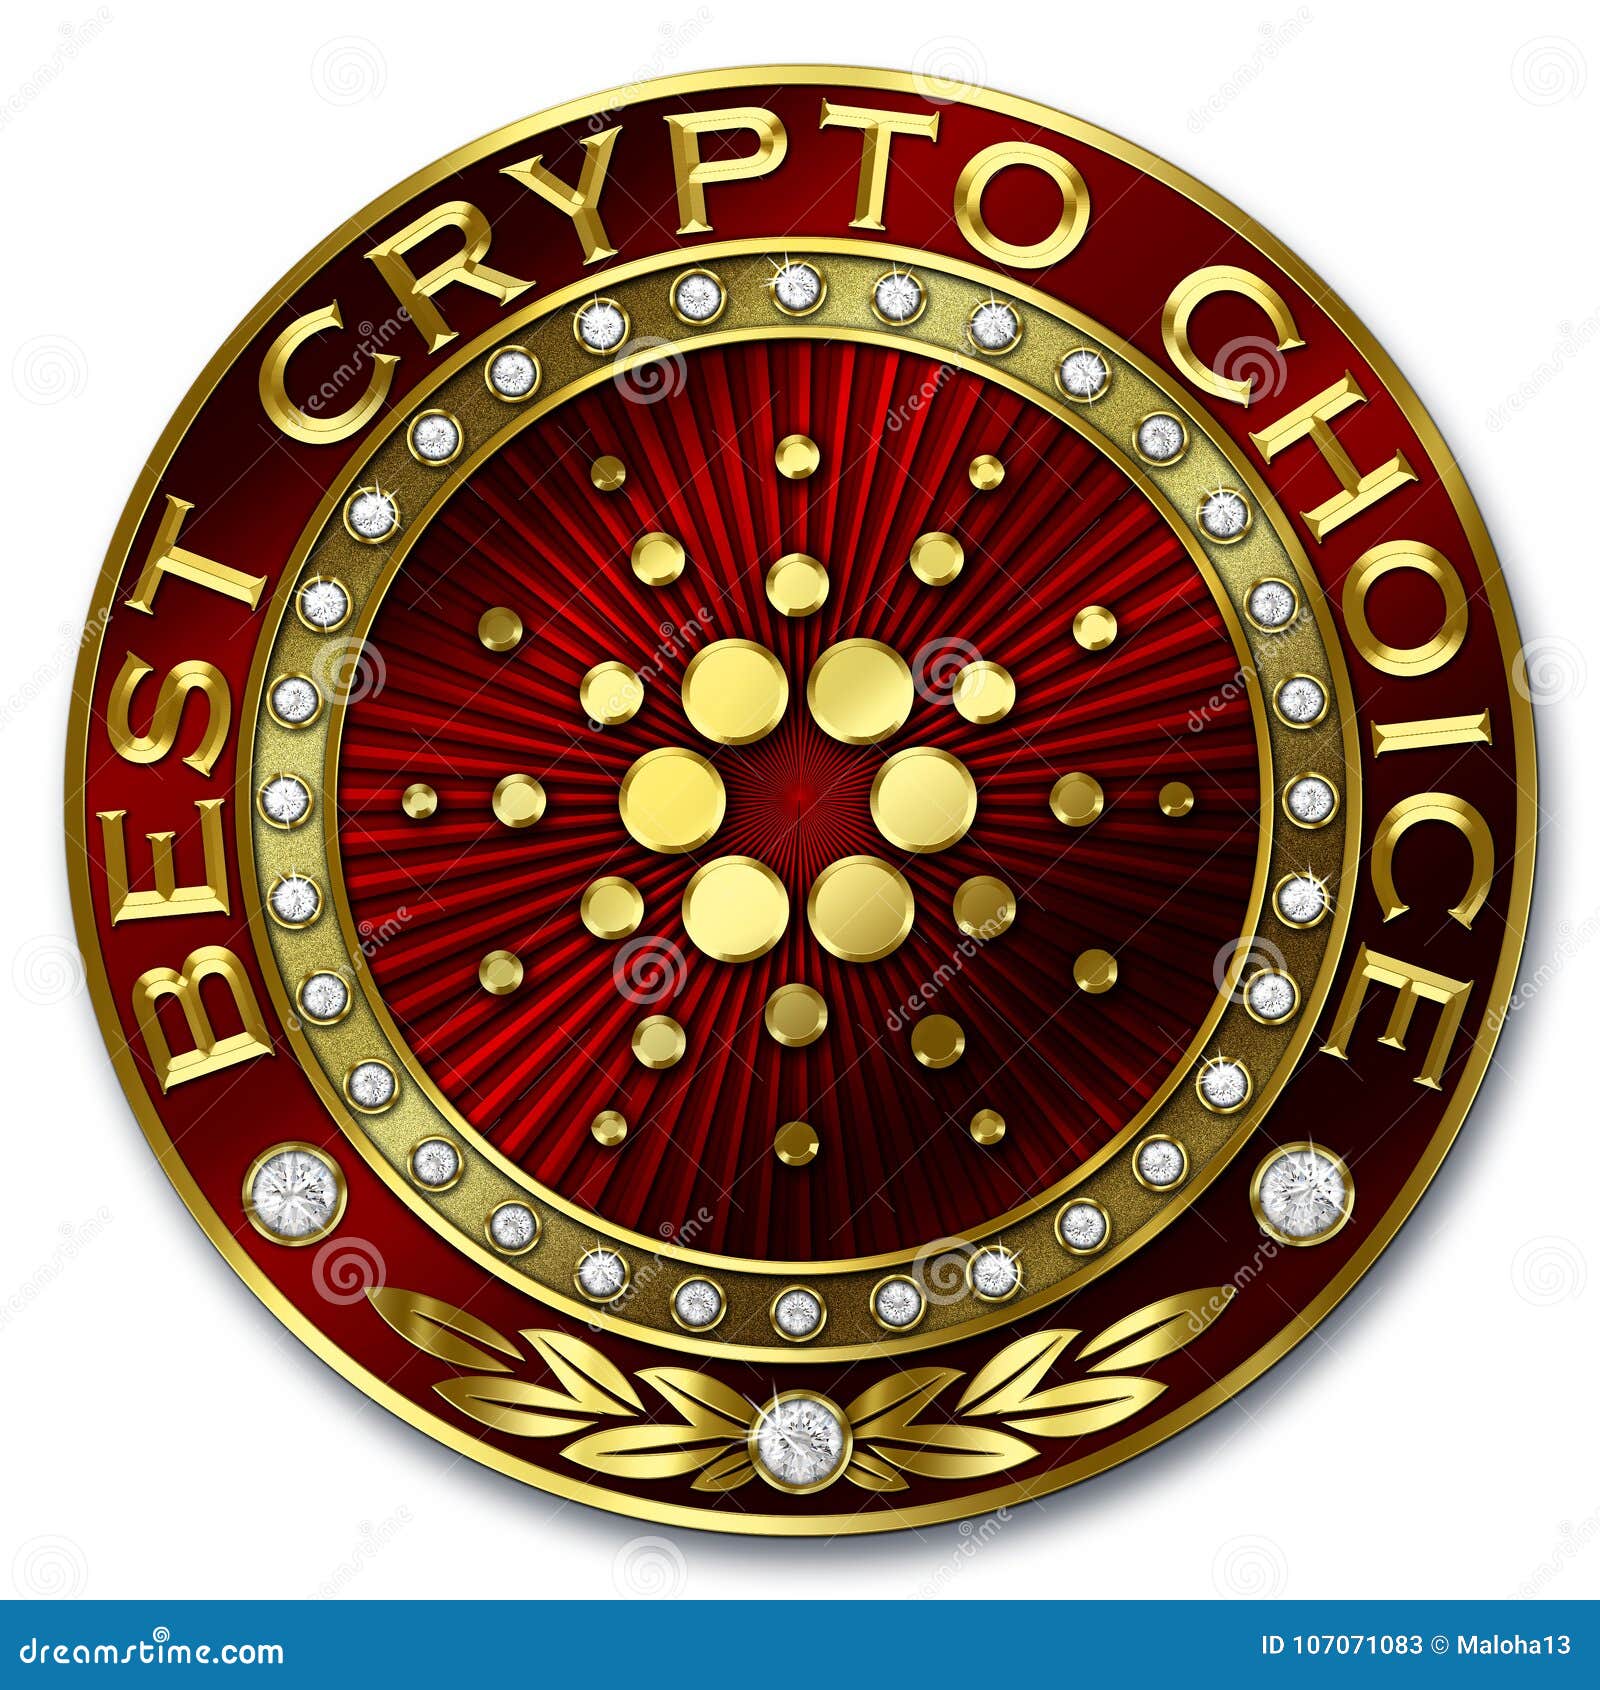 Where To Buy Cardano Crypto - Best Crypto Choice - CARDANO ...